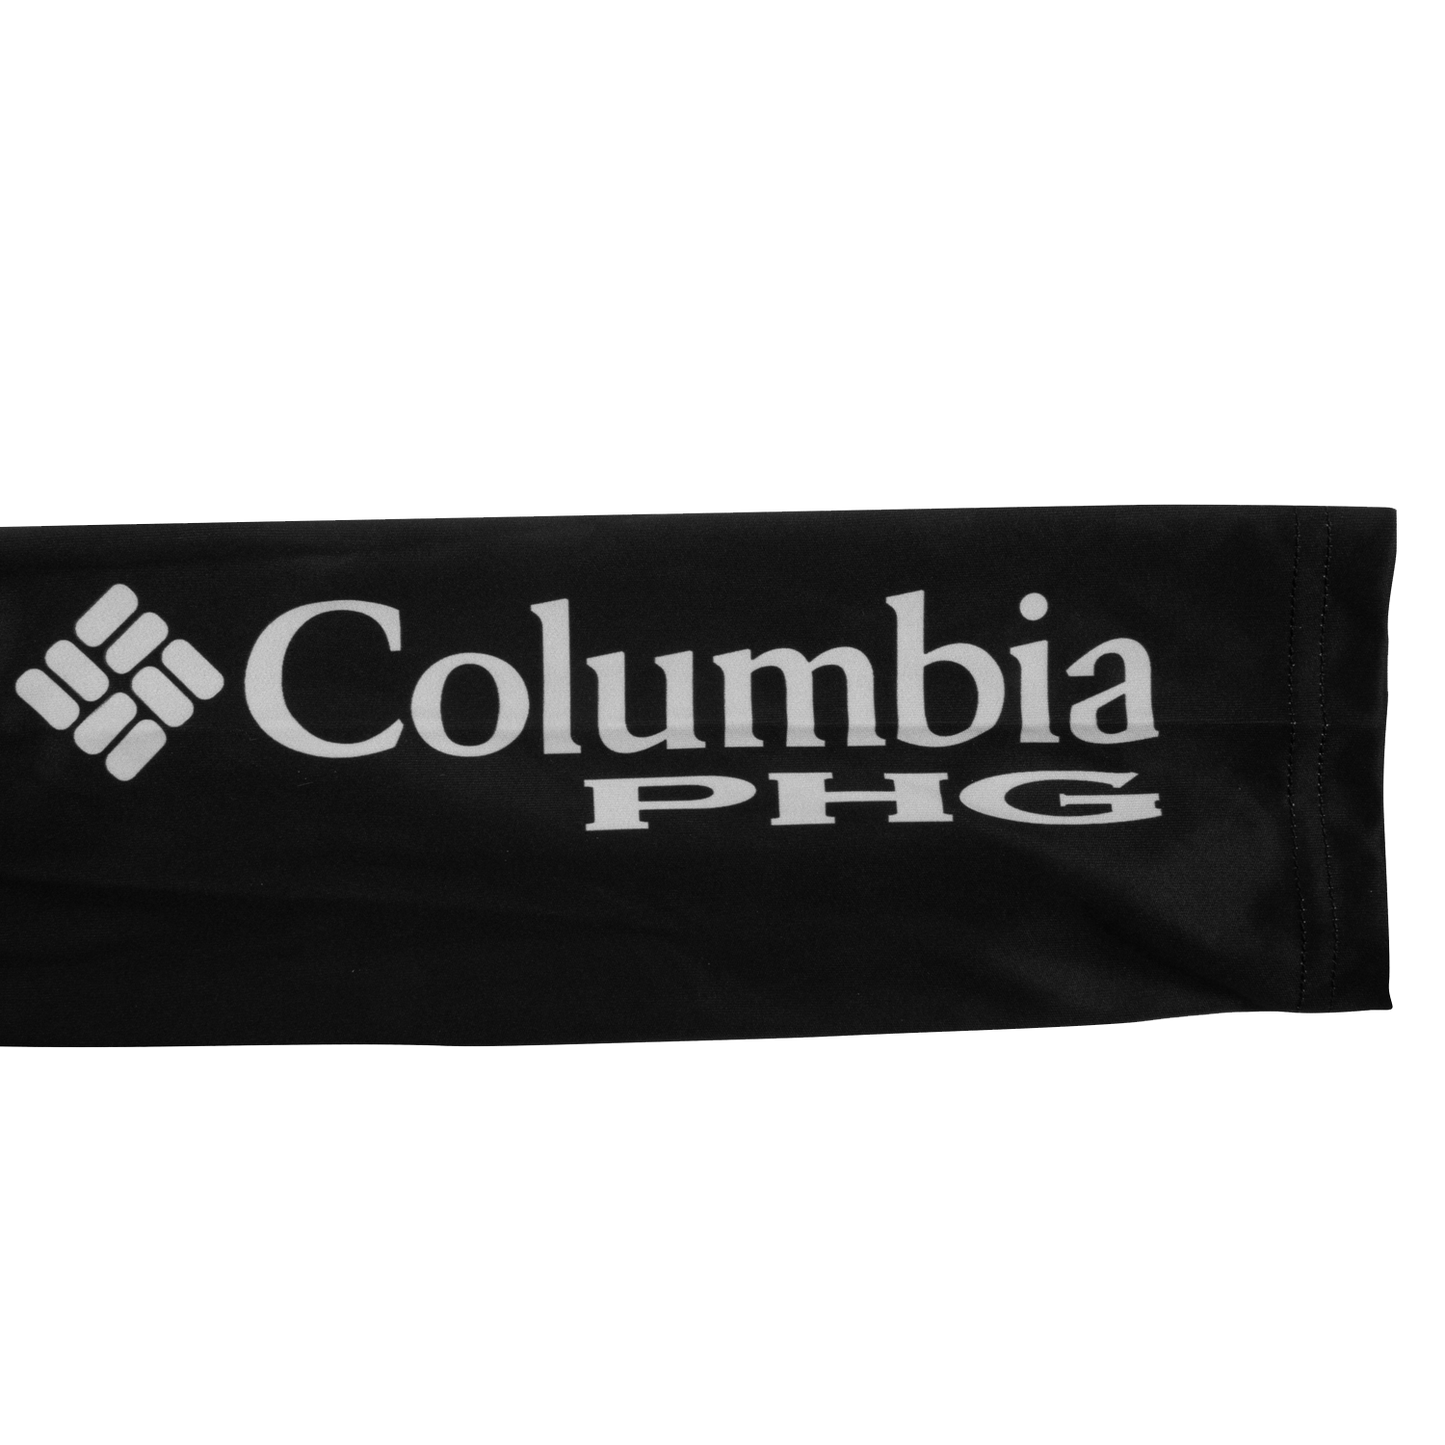 Luke Combs Logo Columbia Longsleeve - Black